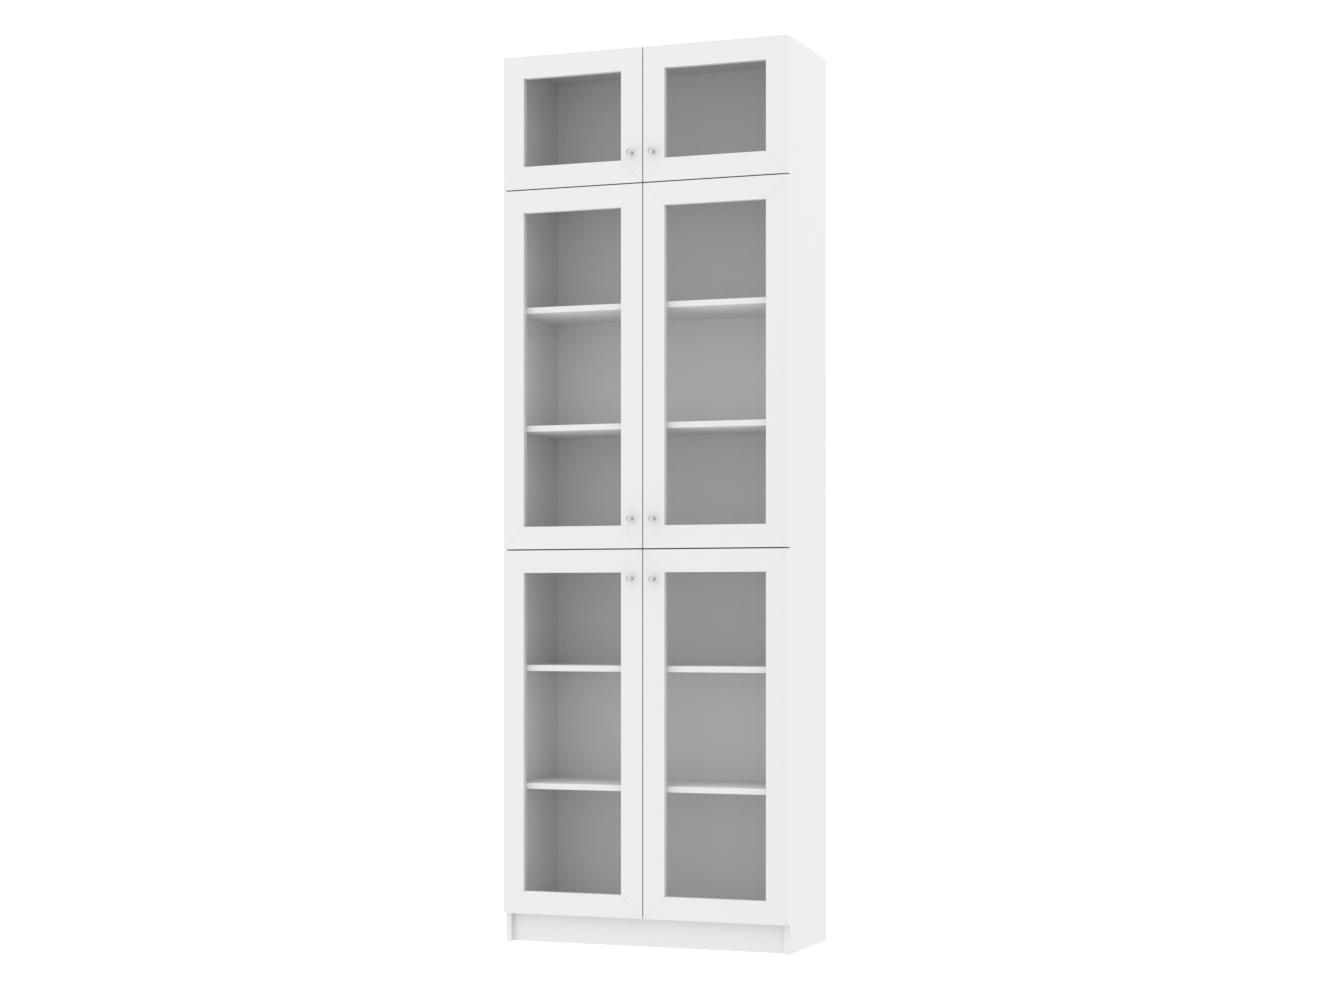  Книжный шкаф Билли 383 white ИКЕА (IKEA) изображение товара